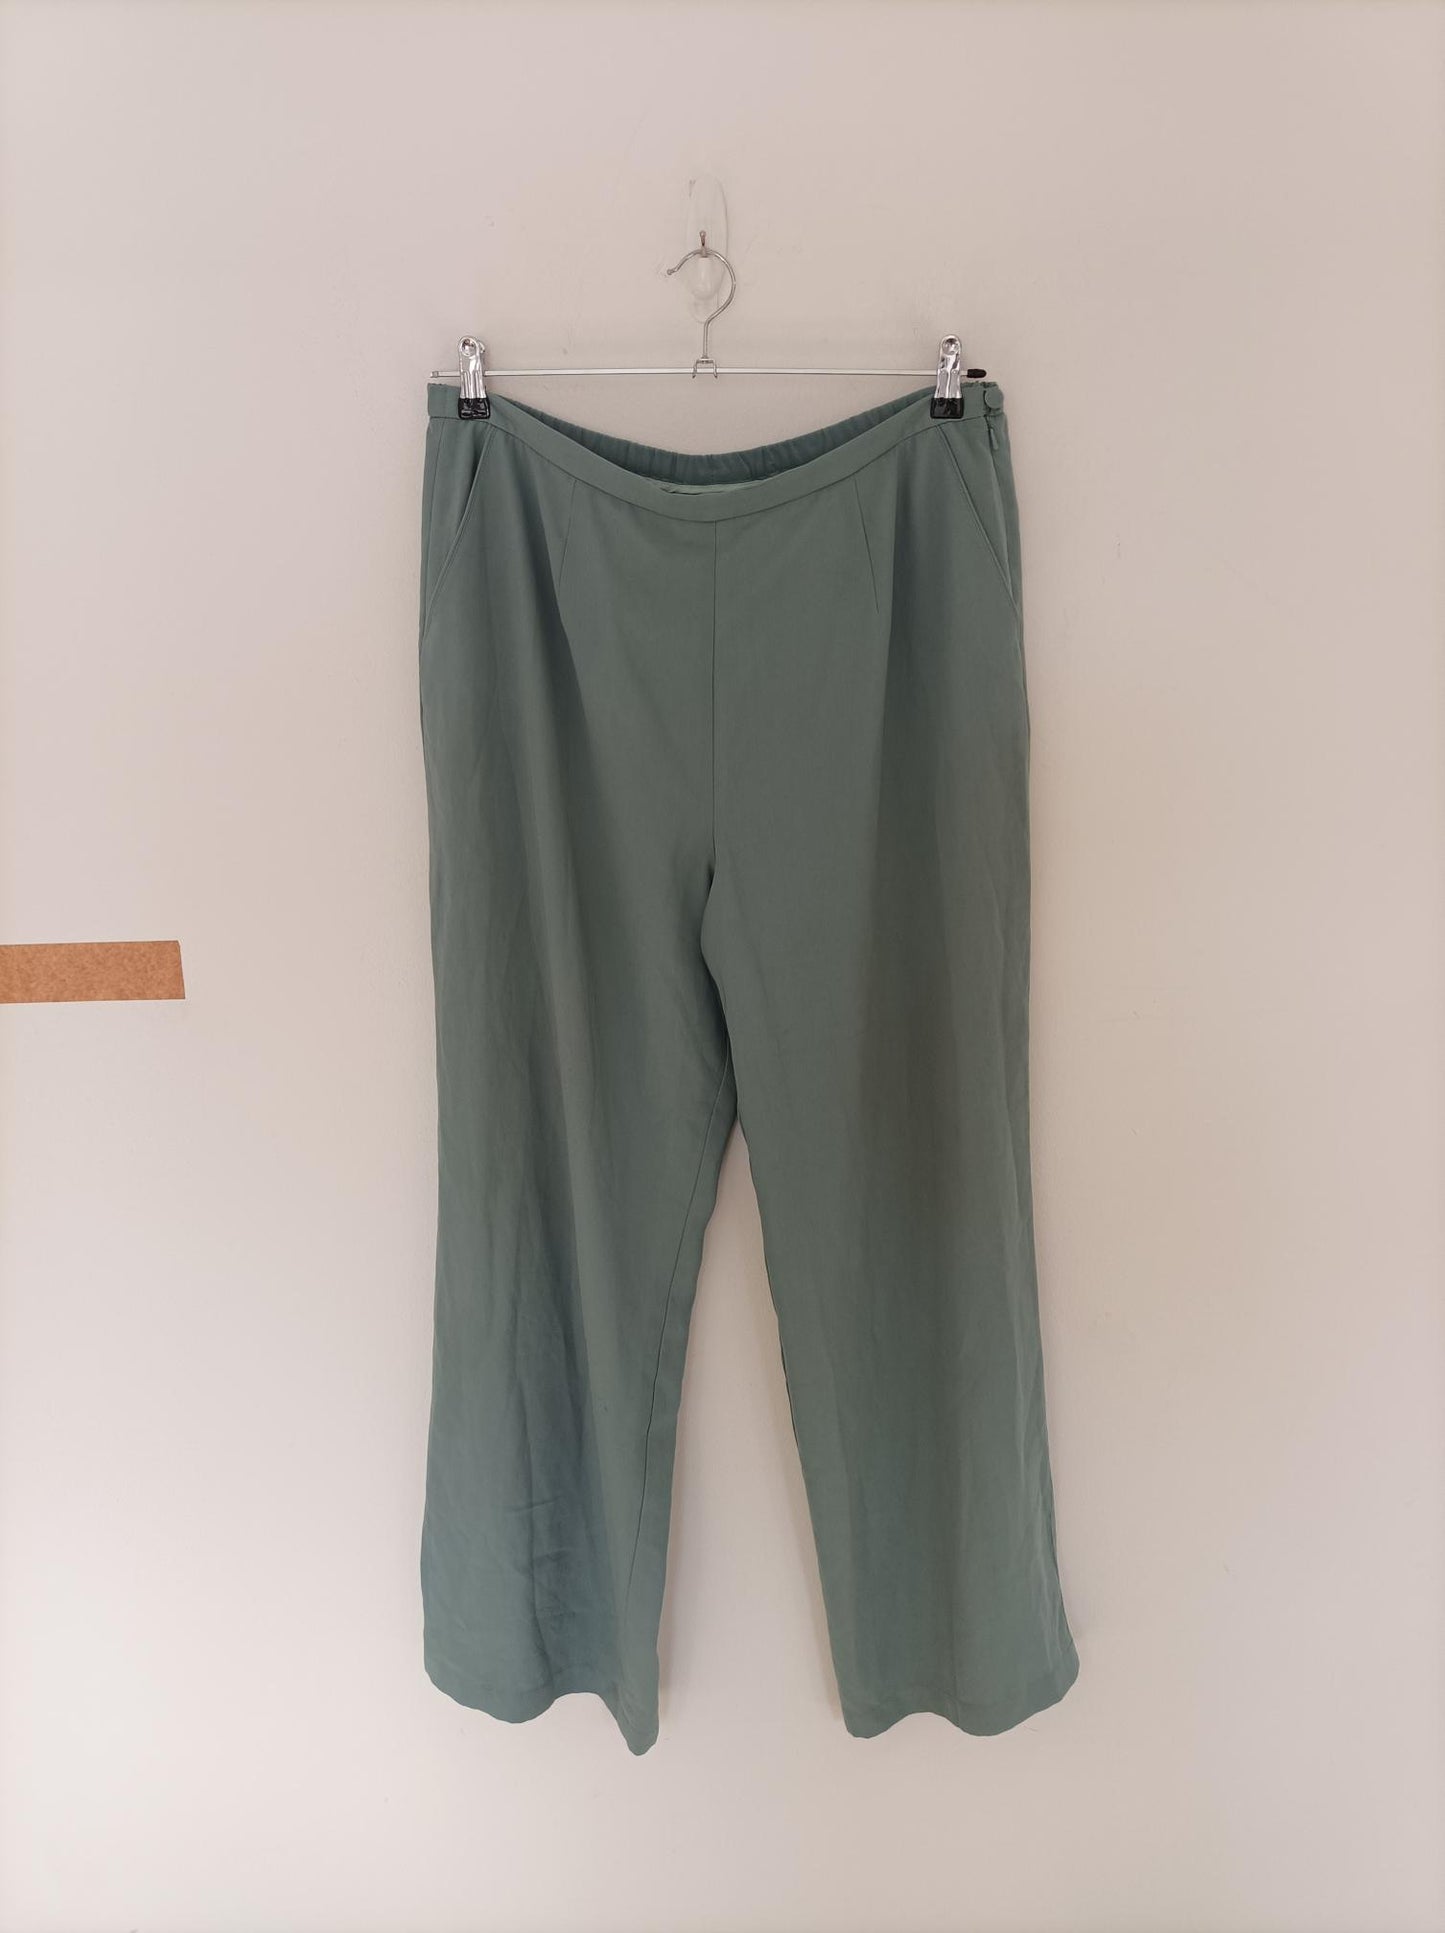 Green Wide Leg Trousers, Jacques Vert, Size 18 - Damaged Item Sale